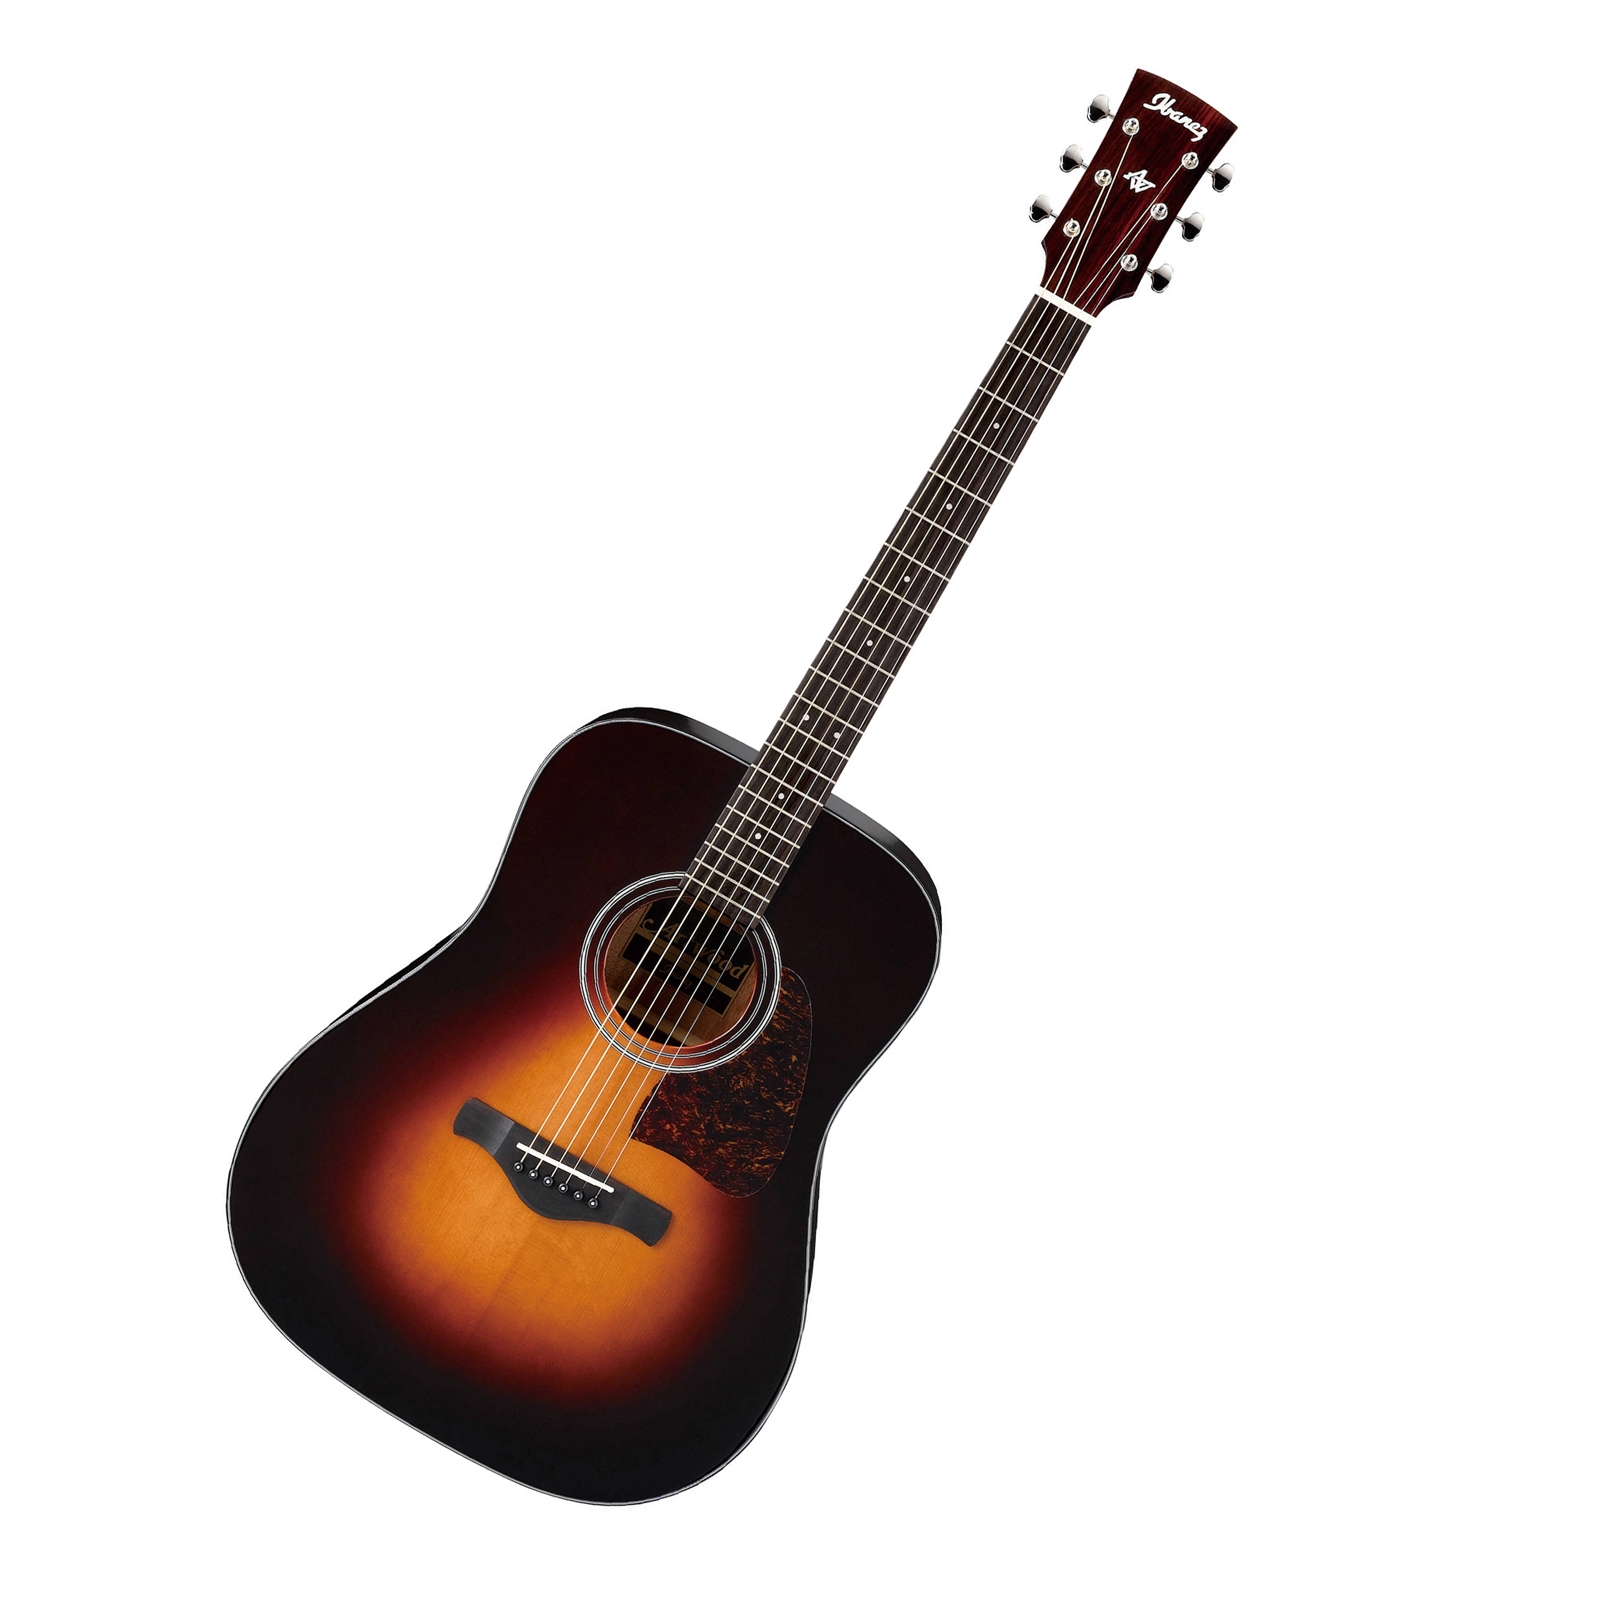 Ibanez AW400 Artwood Series Acoustic Guitar